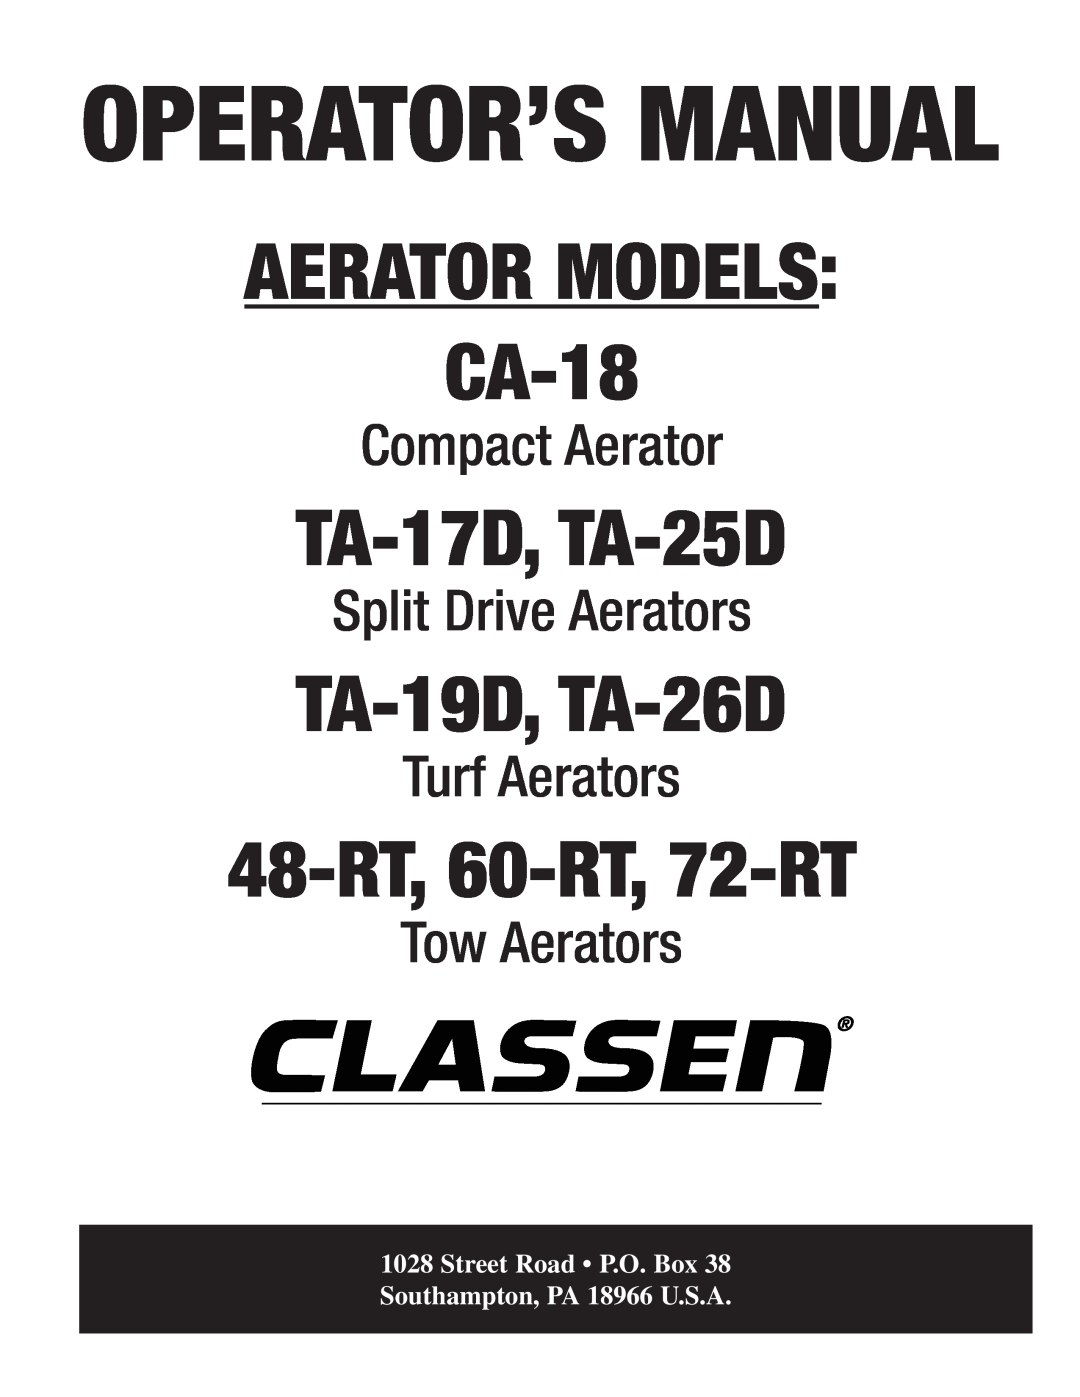 Classen manual Operator’S Manual, AERATOR MODELS CA-18, TA-17D, TA-25D, TA-19D, TA-26D, 48-RT, 60-RT, 72-RT 